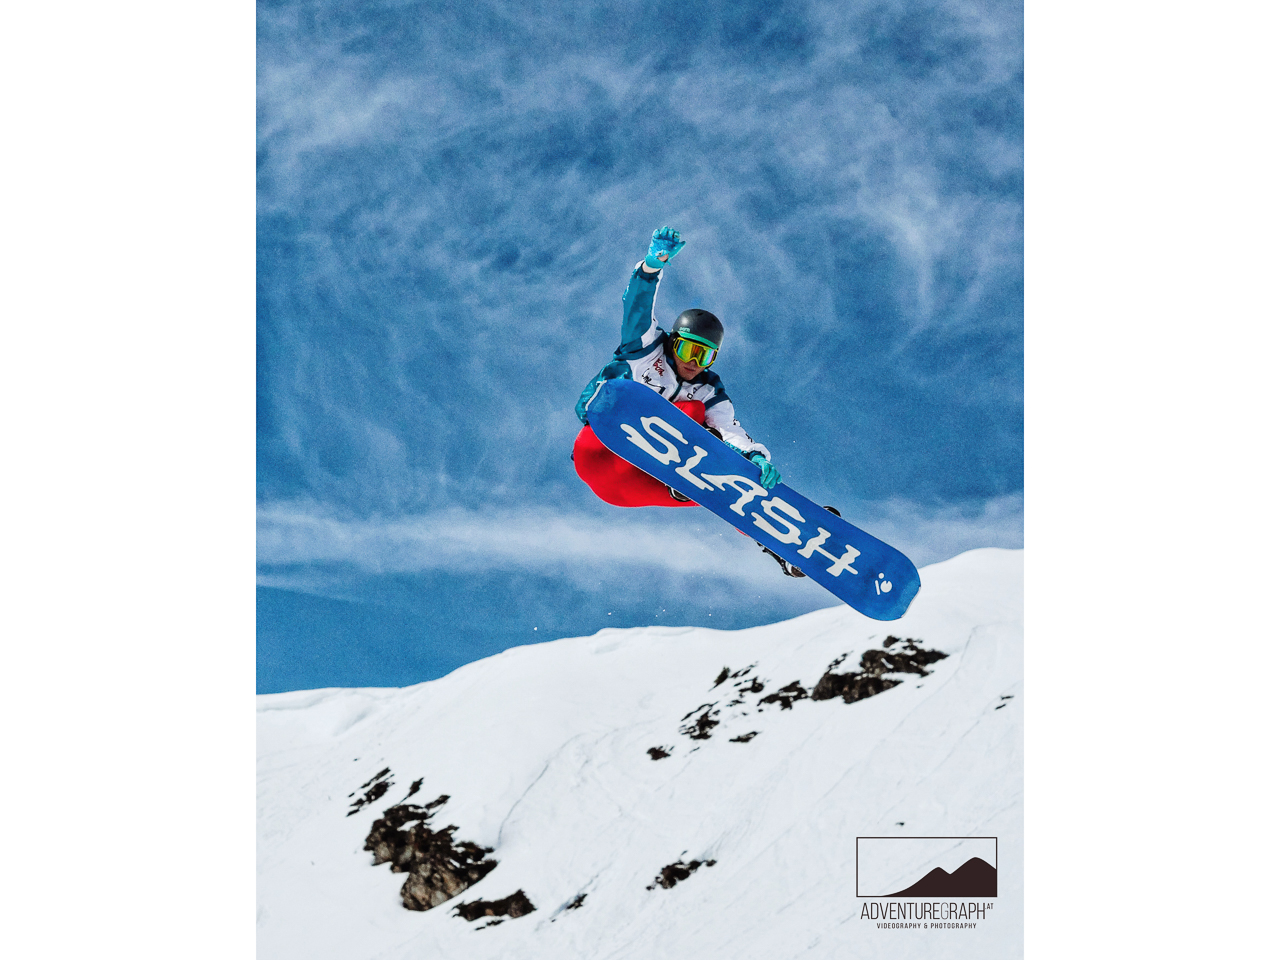 Stylish snowboard grab at event near Innsbruck.